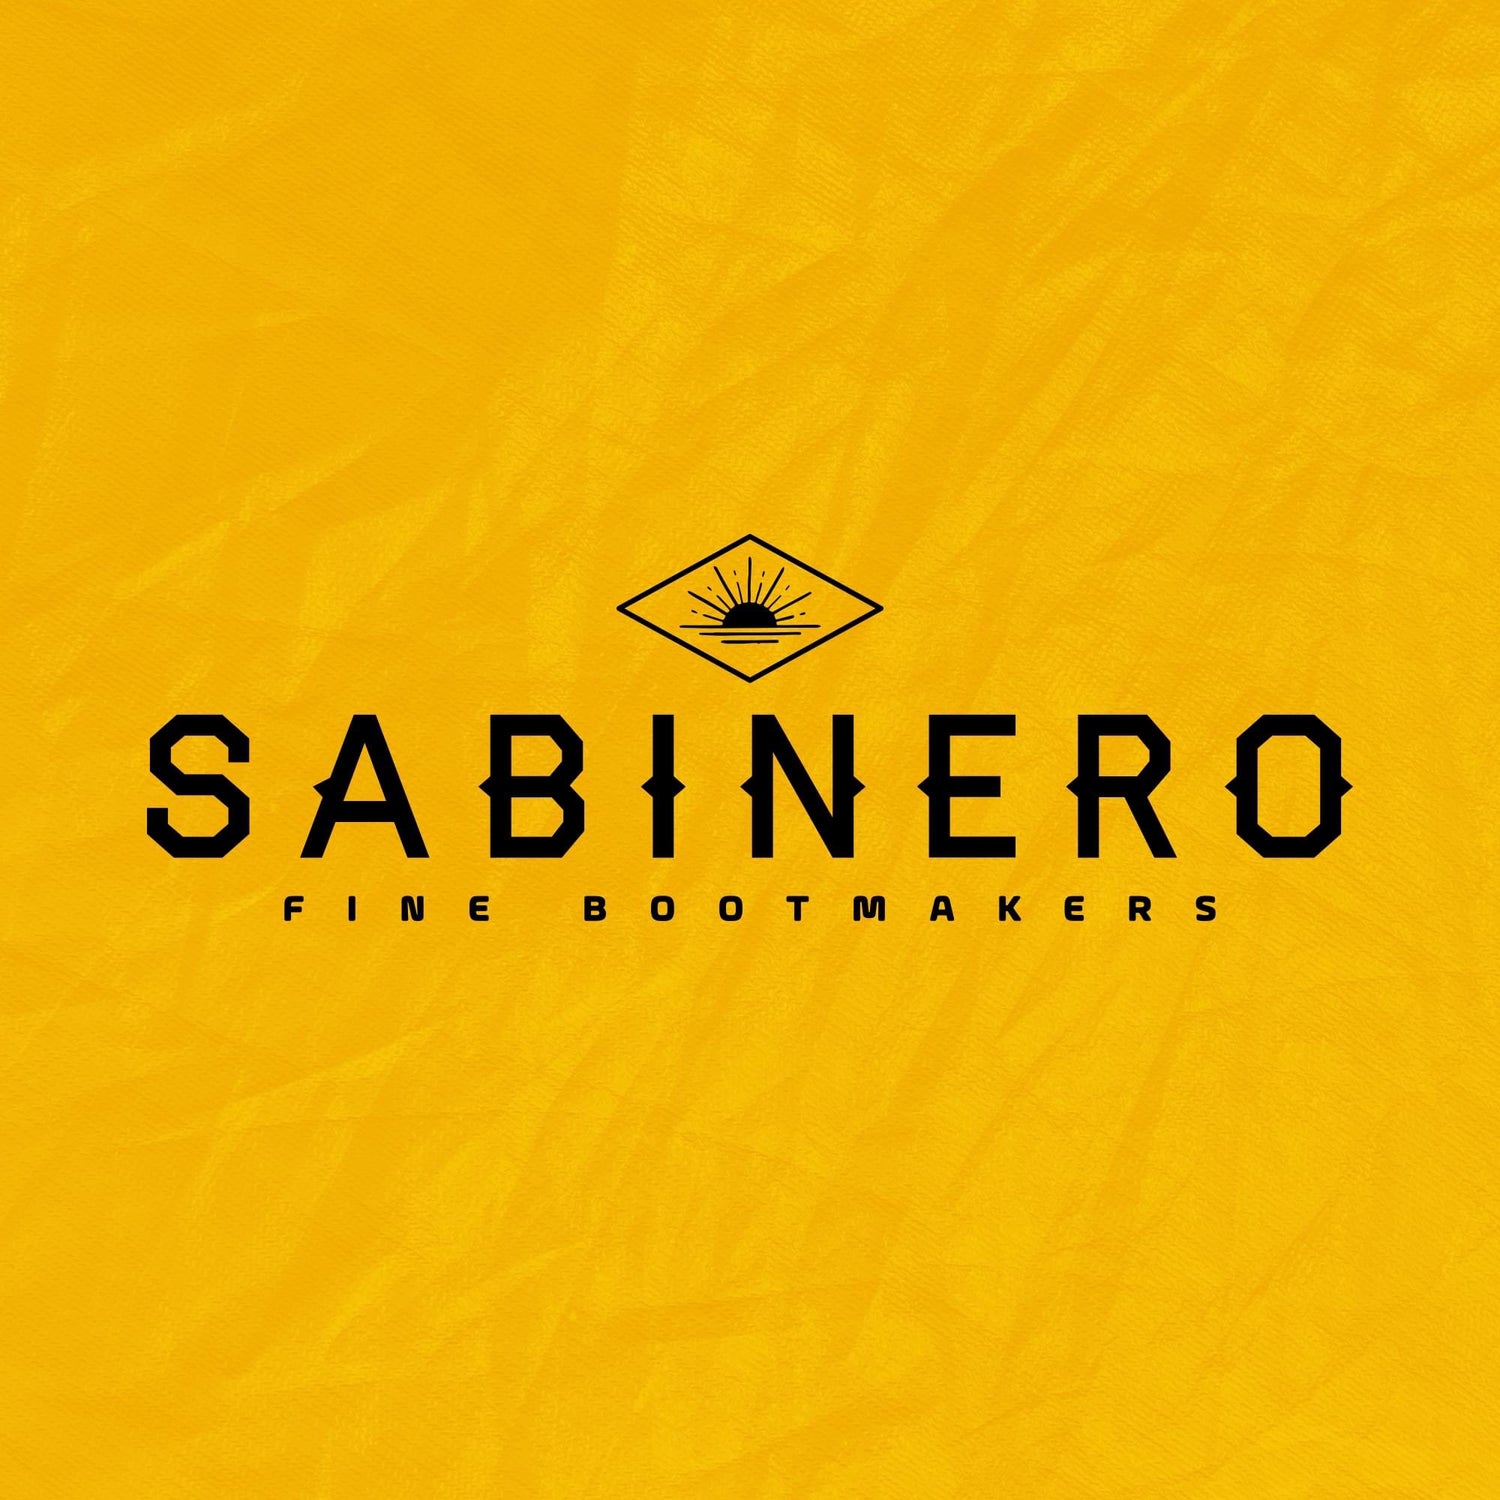 Sabinero Boots